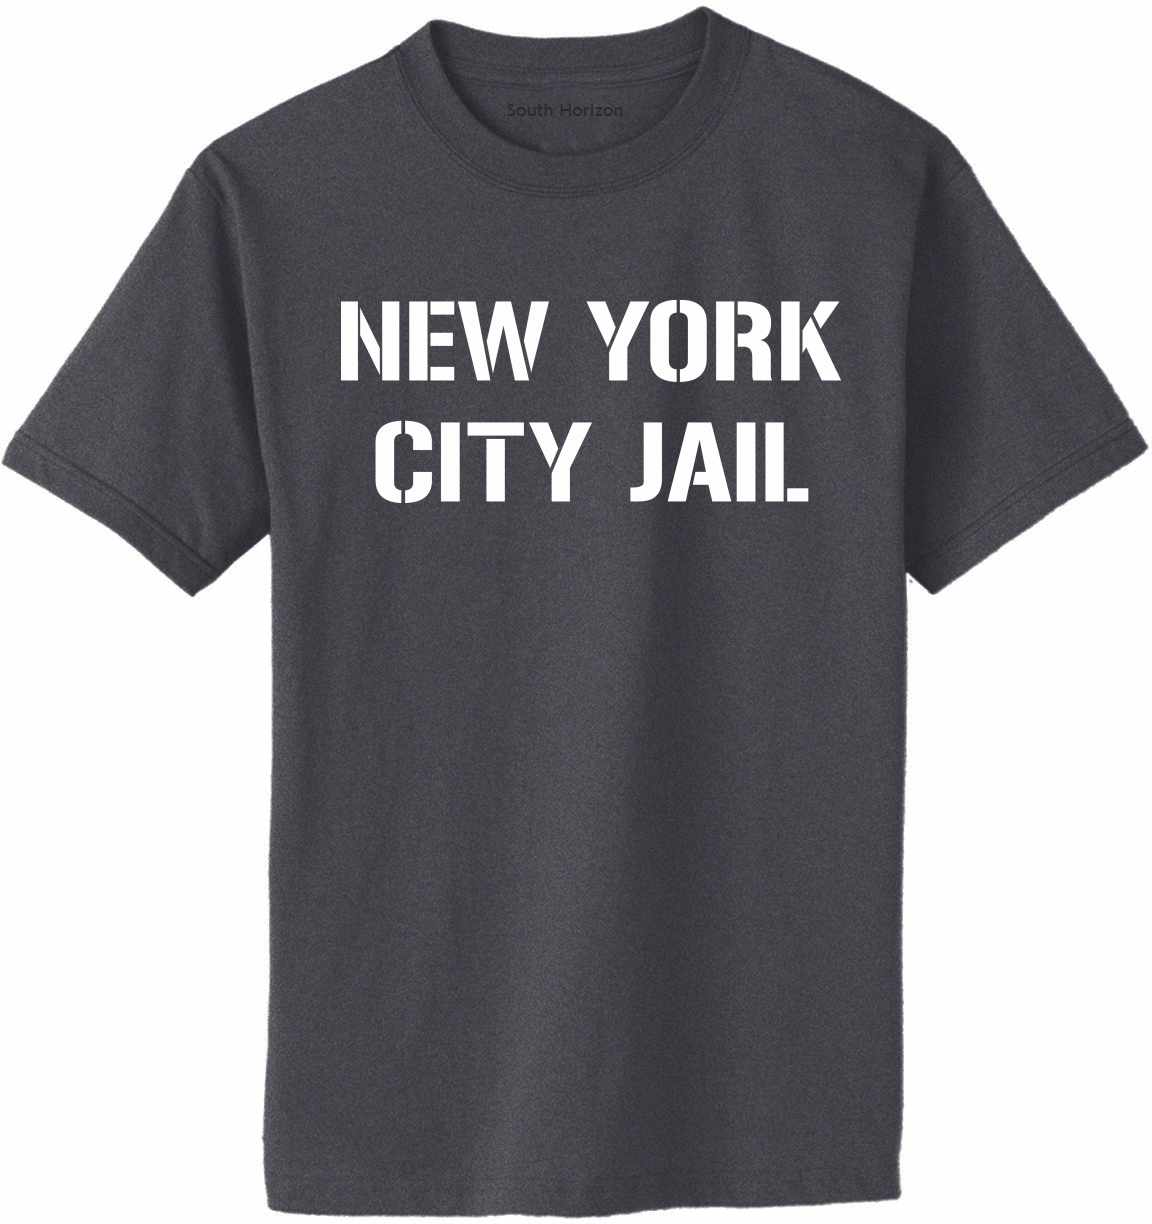 NEW YORK CITY JAIL Adult T-Shirt